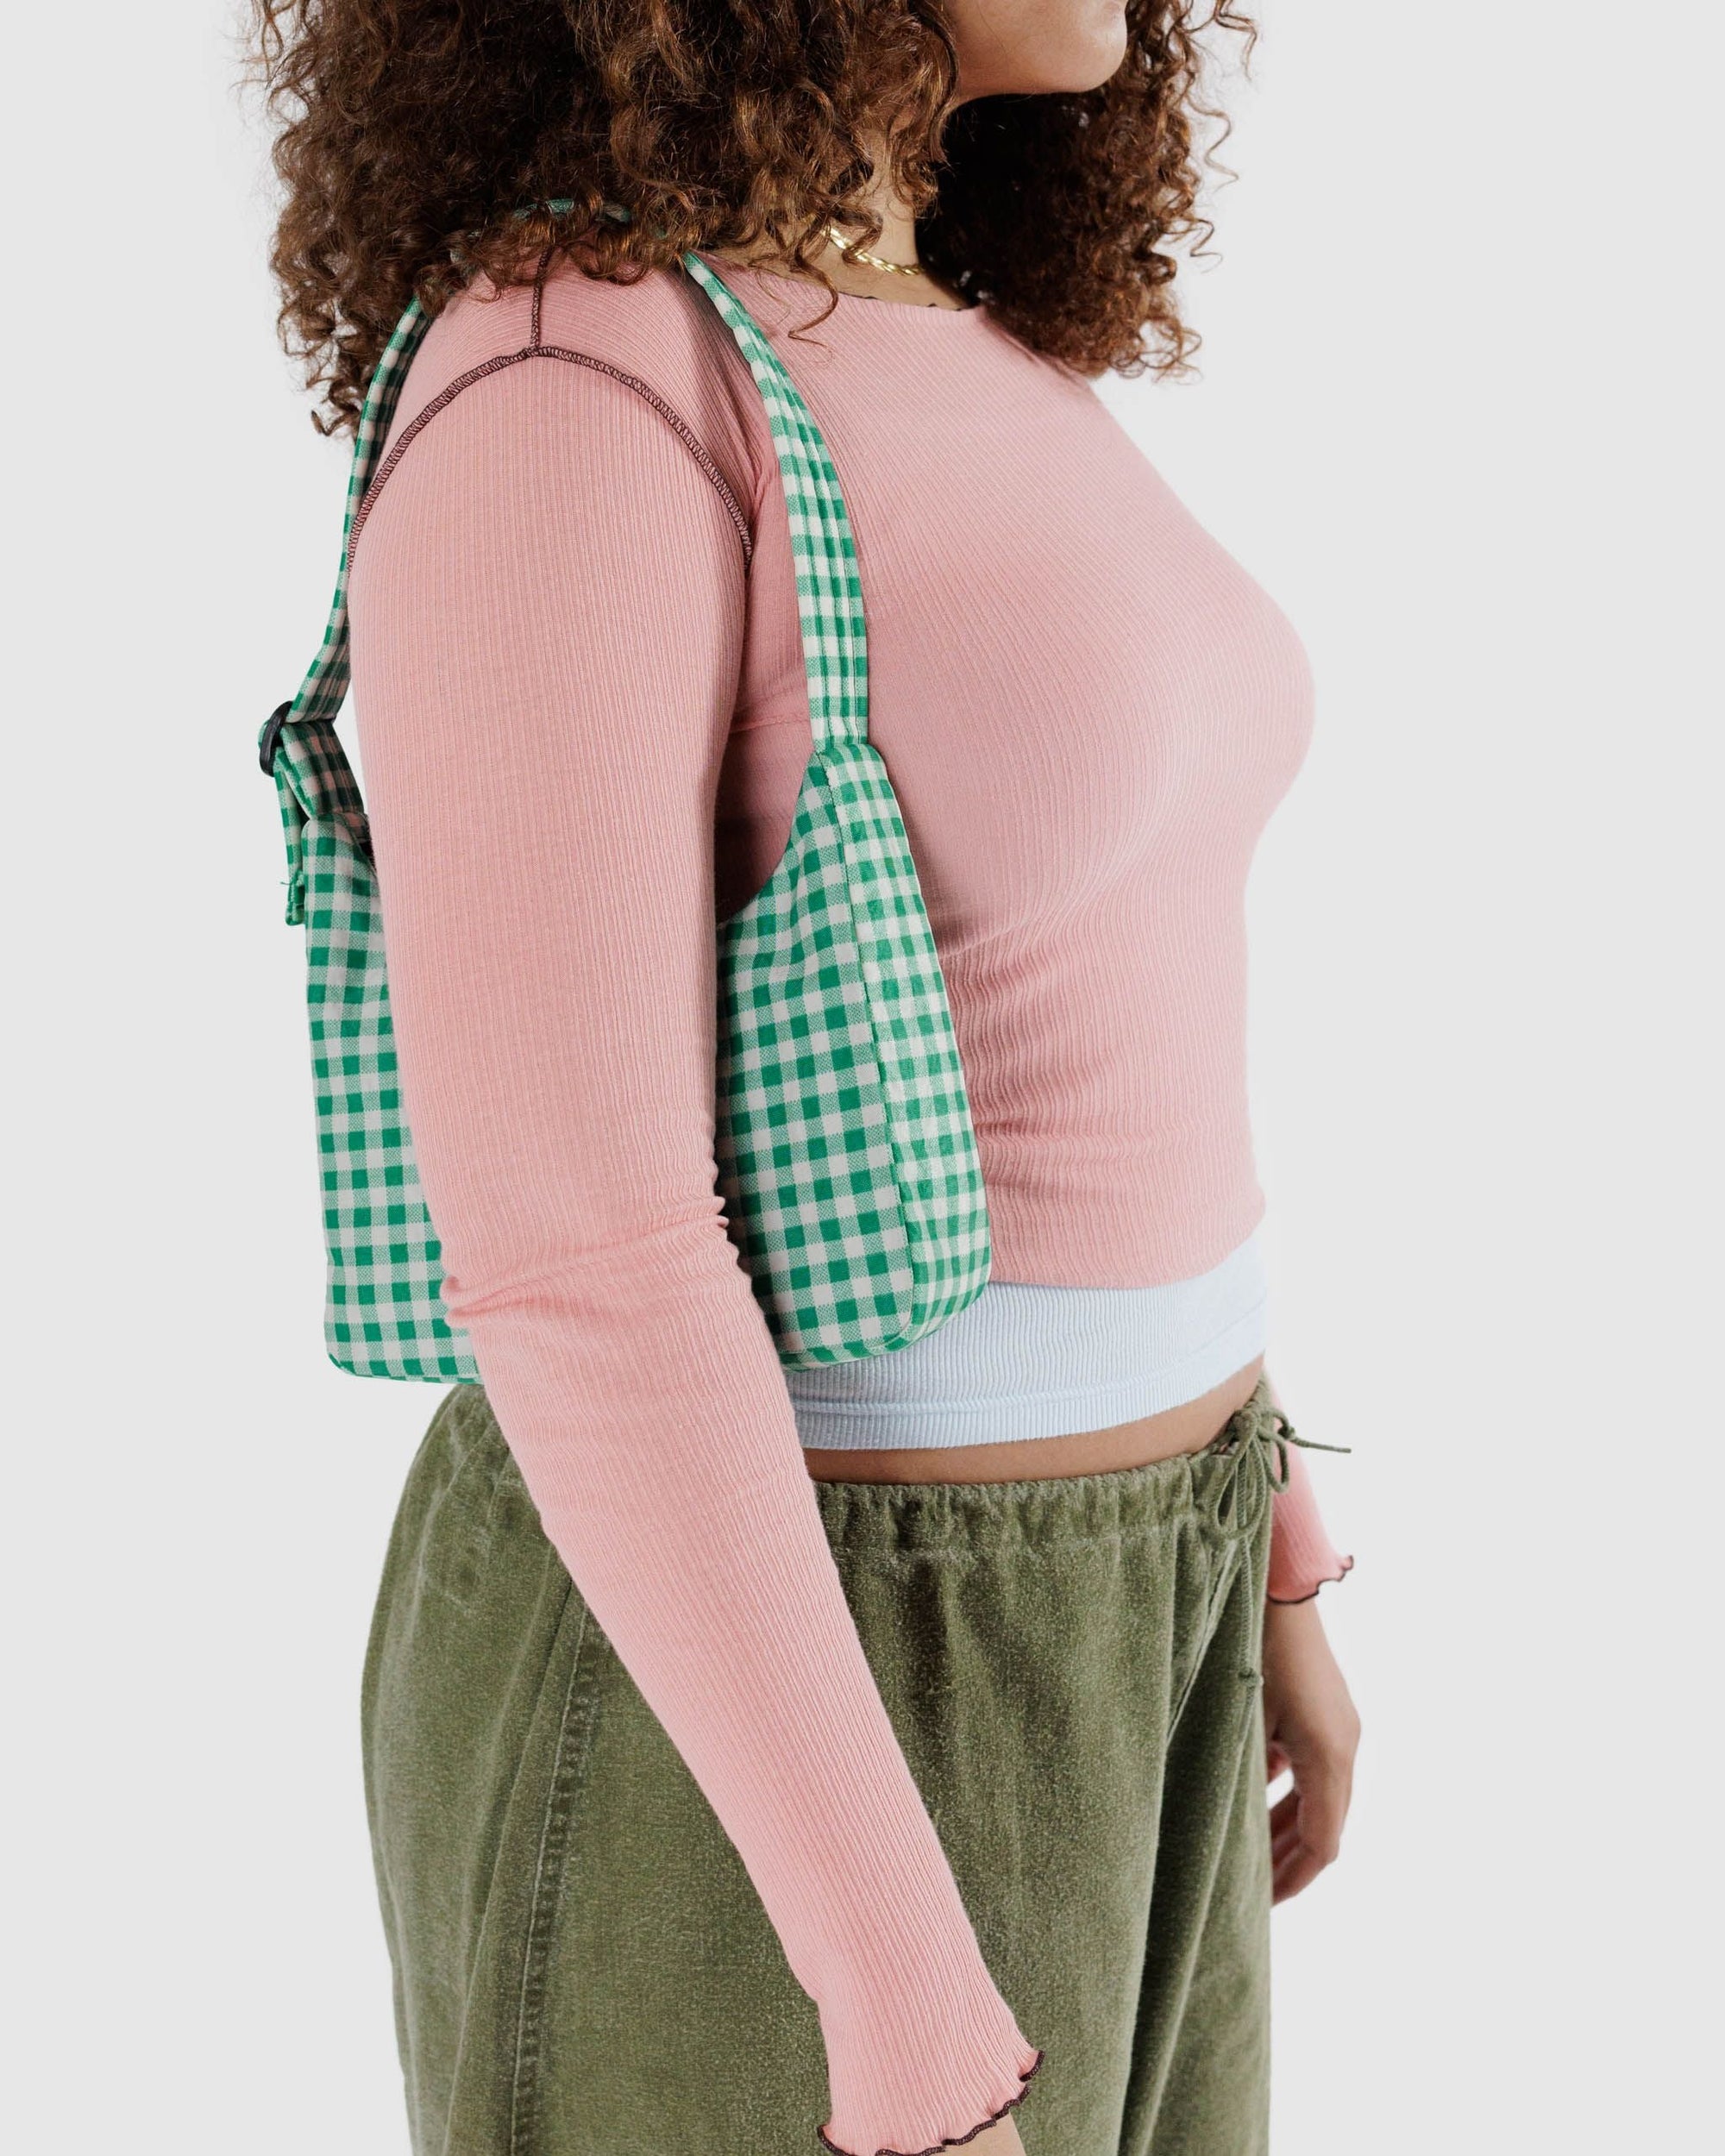 Mini Nylon Shoulder Bag, Green Gingham